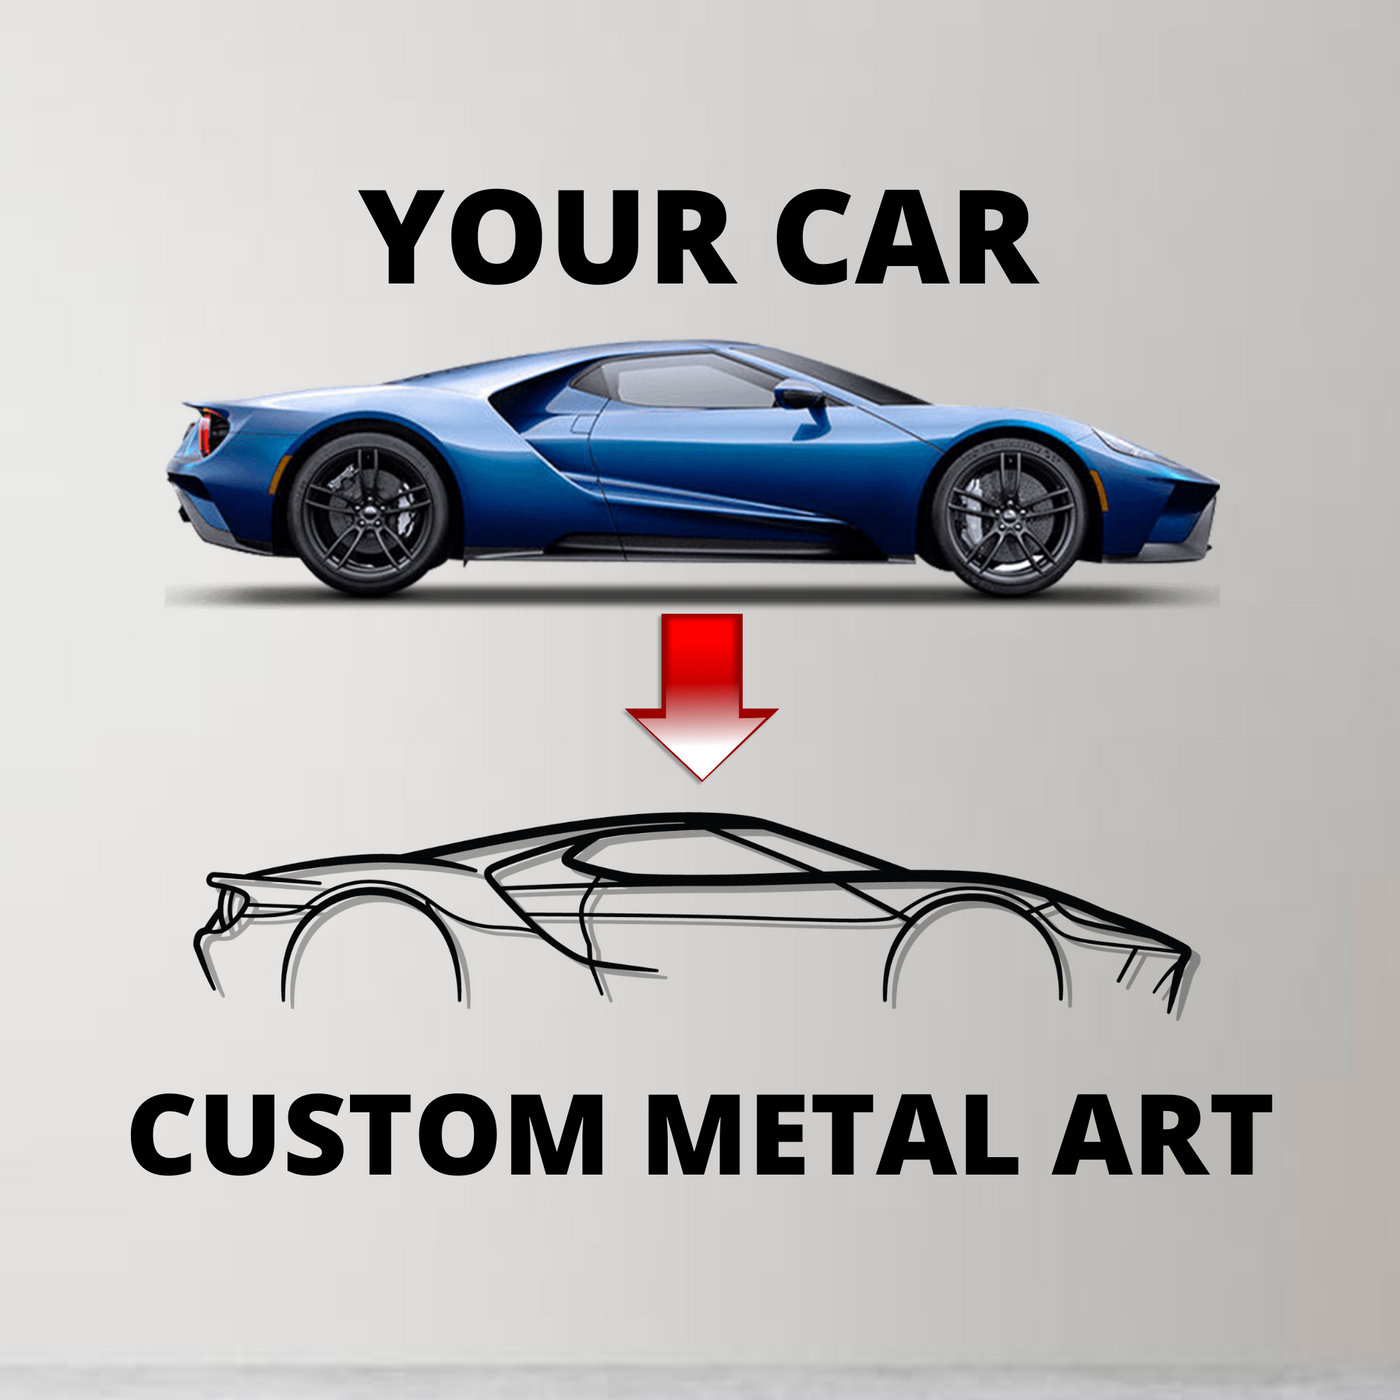 E36 Coupe Classic Silhouette Metal Wall Art